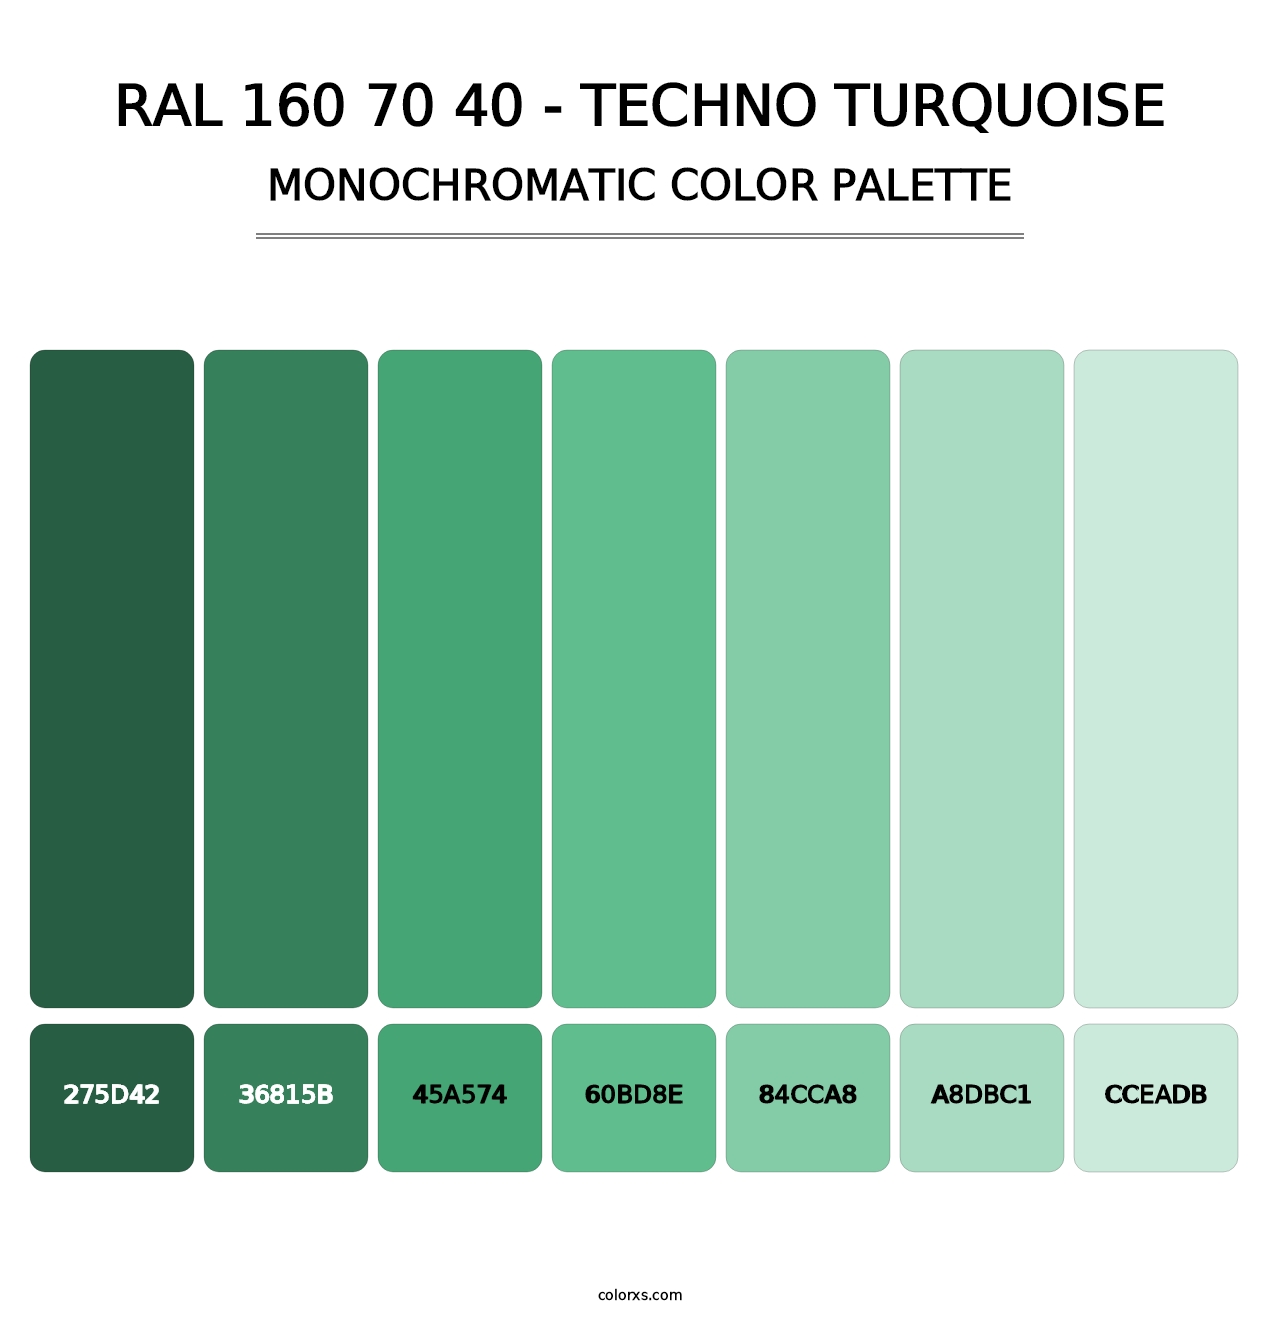 RAL 160 70 40 - Techno Turquoise - Monochromatic Color Palette